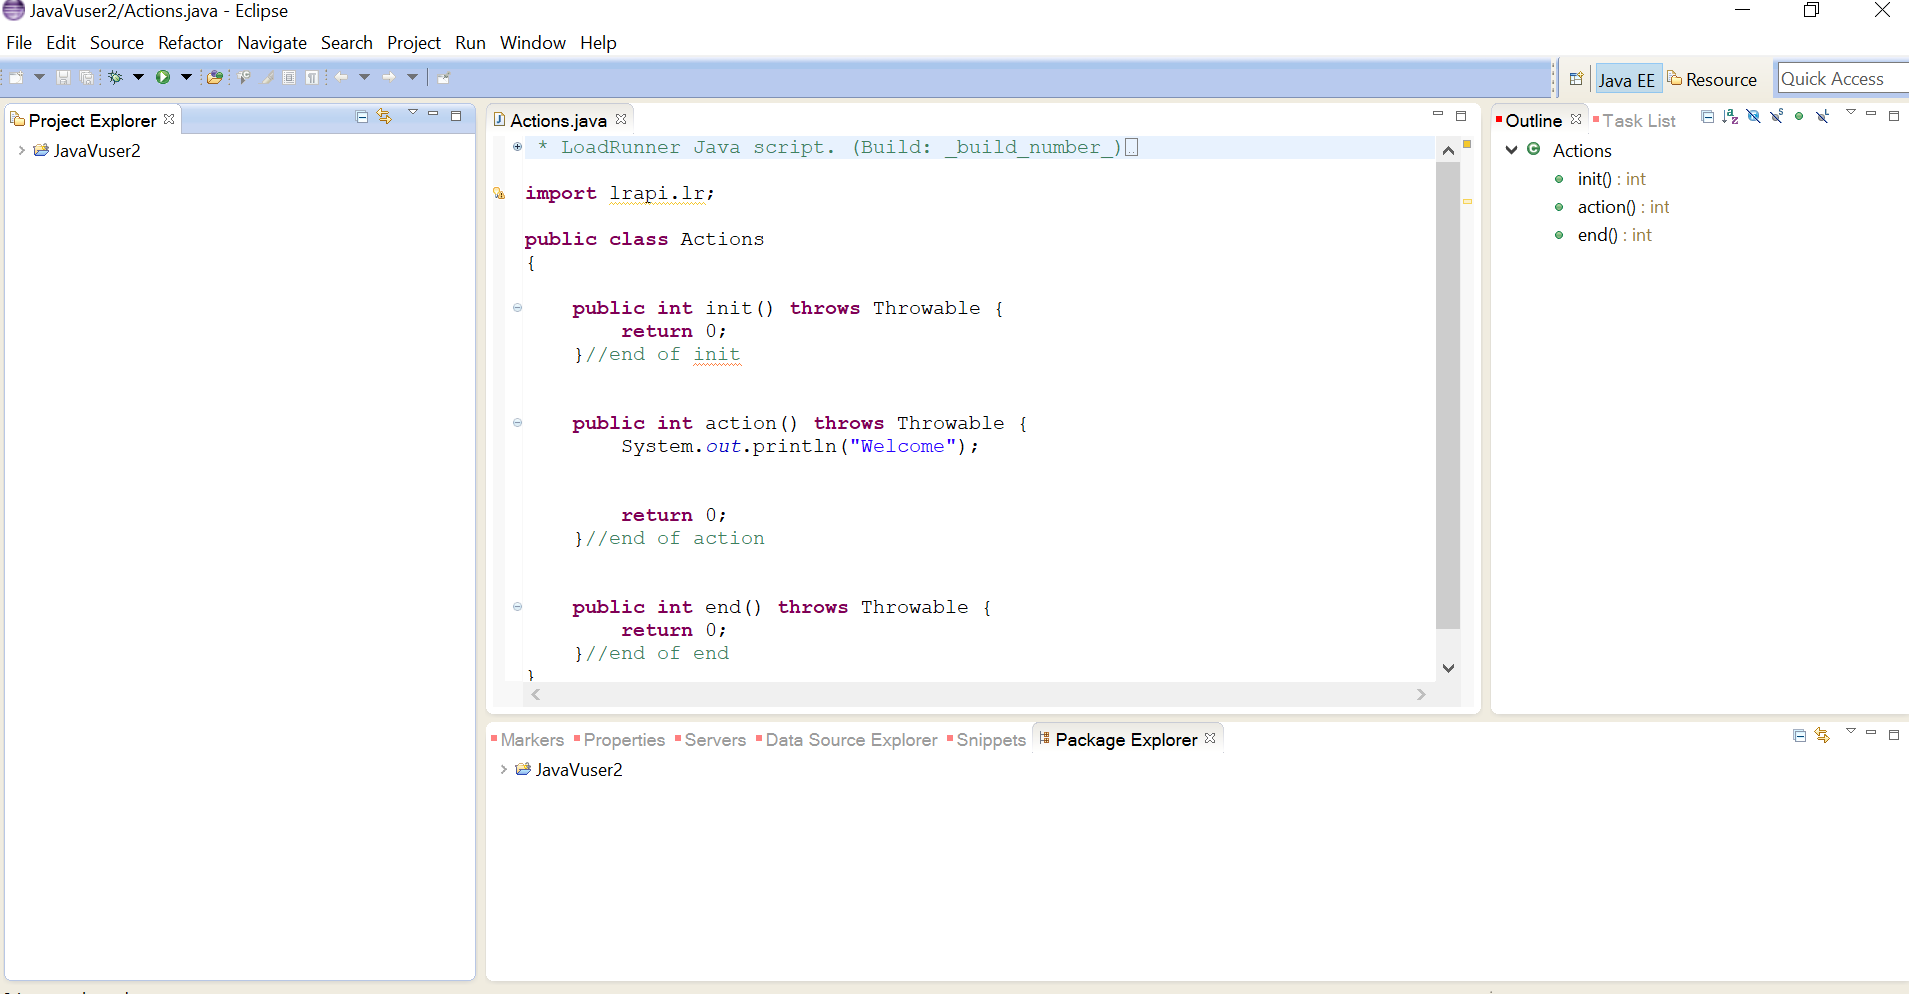 How to use Eclipse for Java Vuser Script Development in LoadRunner